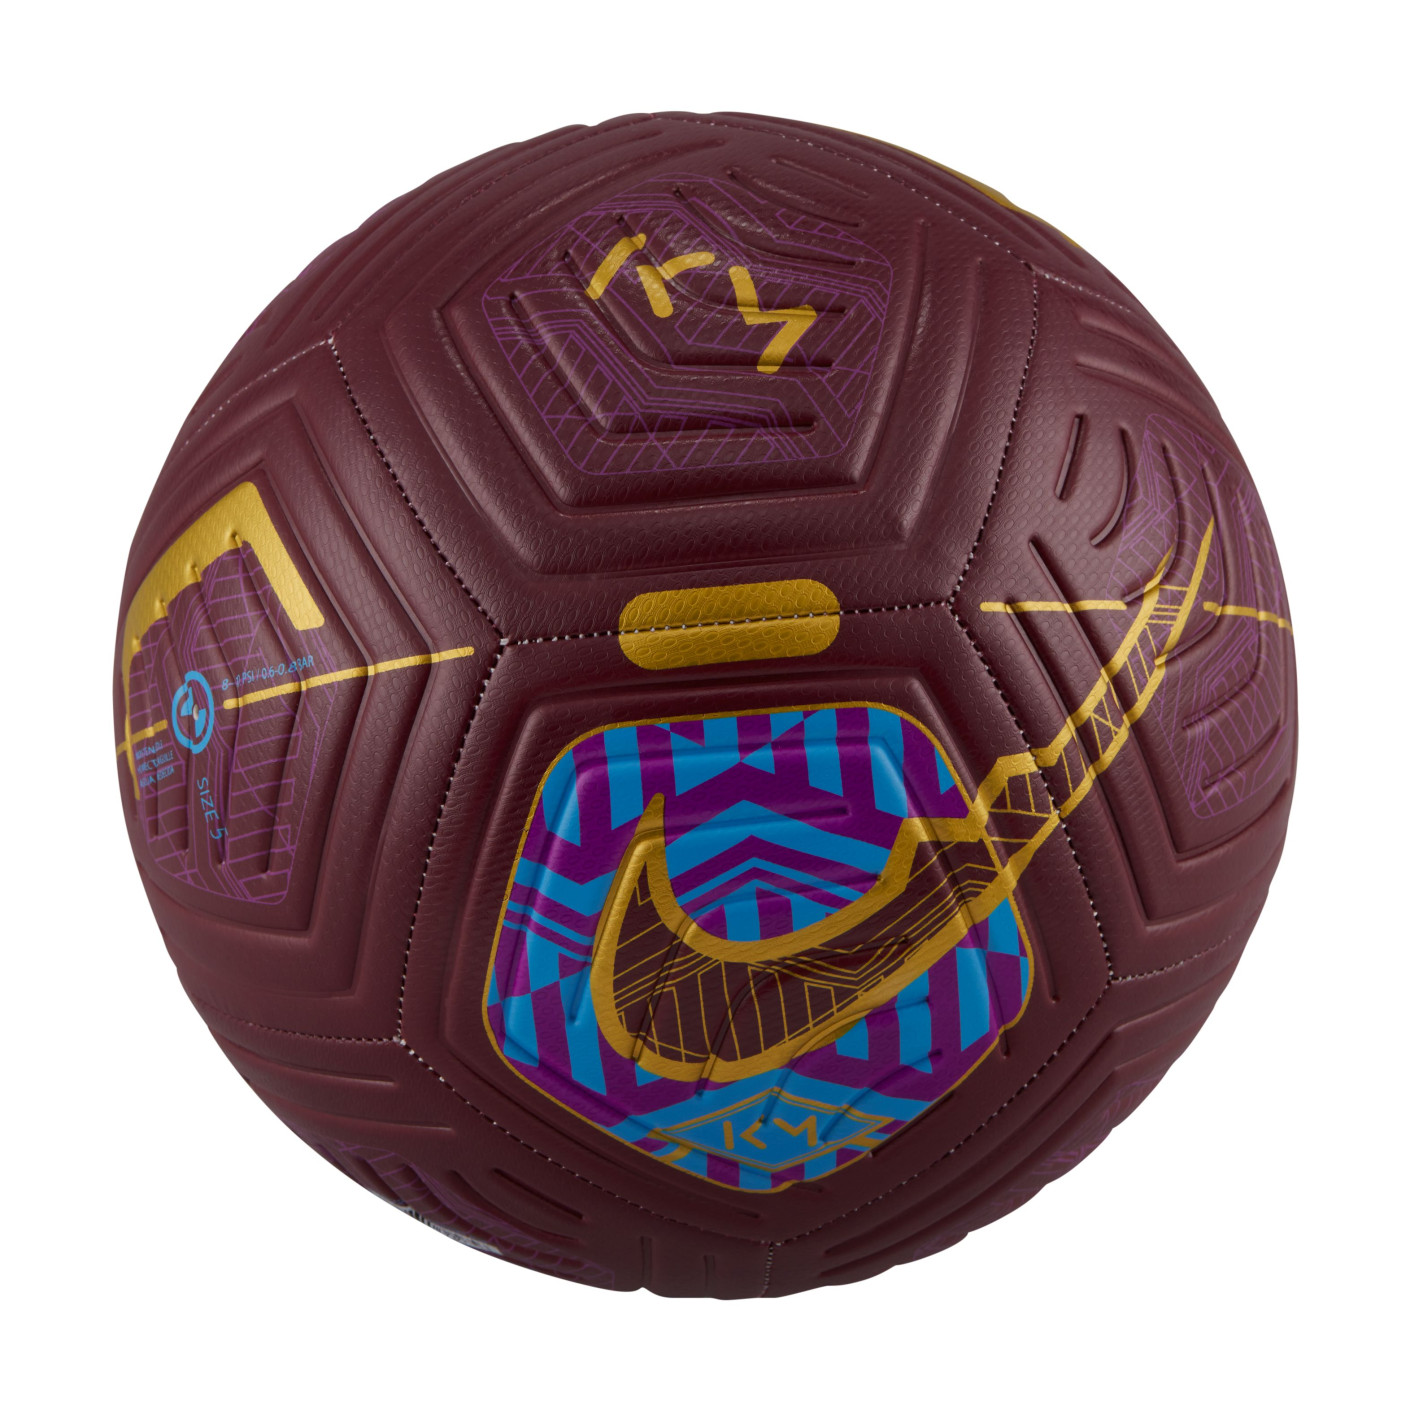 Nike Strike KM Ballon de Foot Taille 5 Bordeaux Or